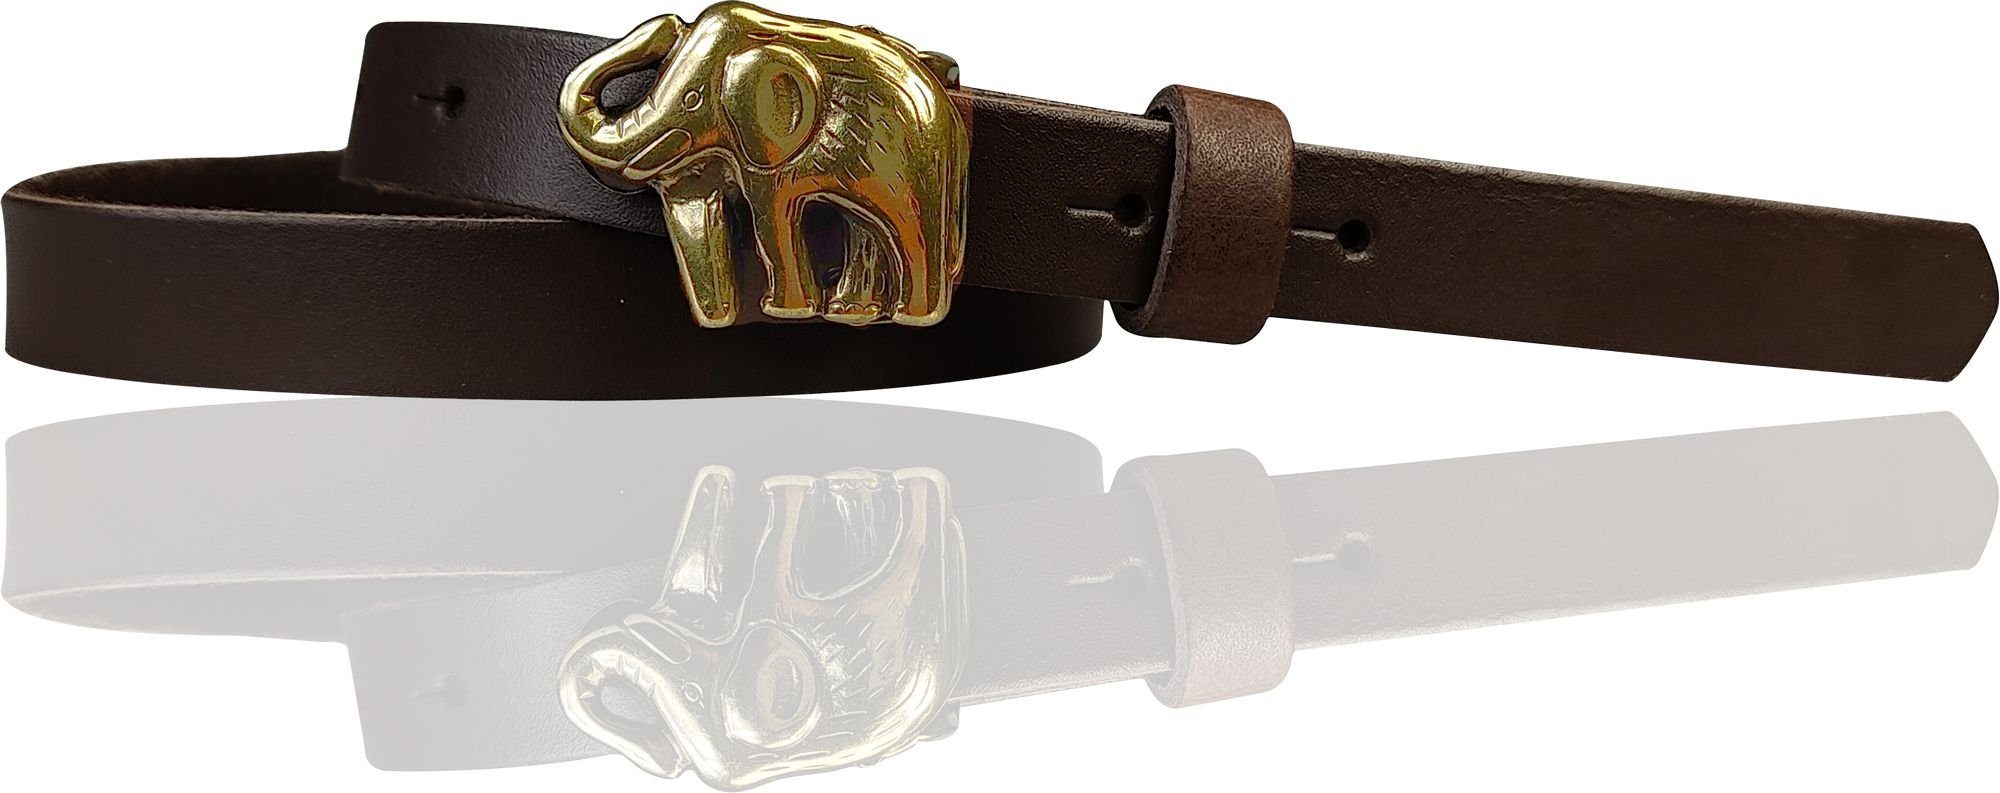 cm Kindergürtel goldener 18726 2 Dunkelbraun FRONHOFER Ledergürtel mit Elefantenschnalle, Hüftgürtel